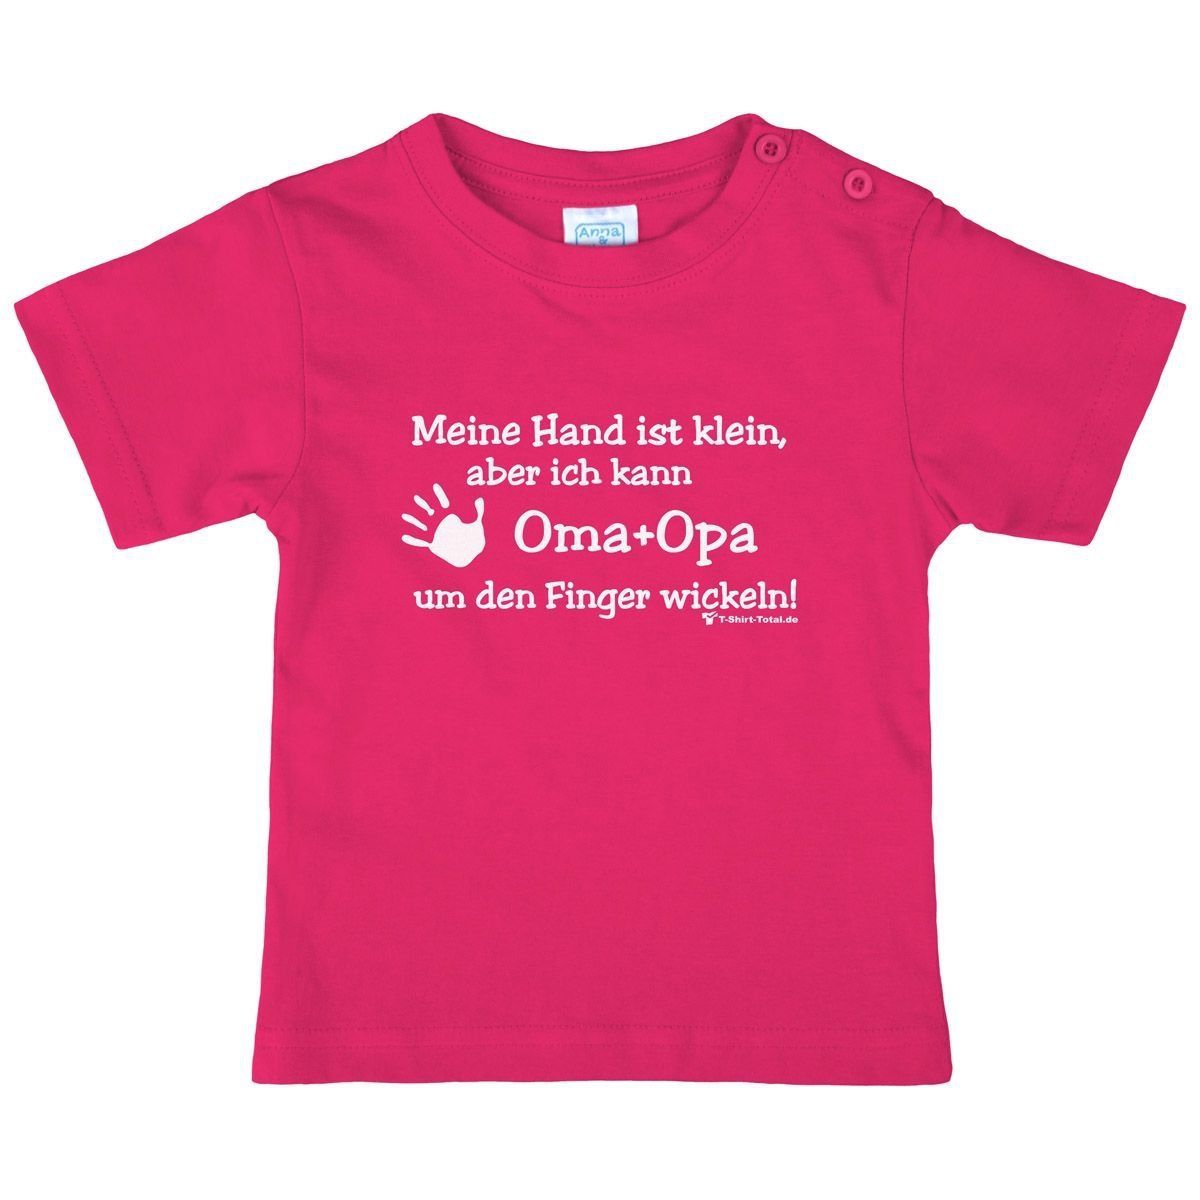 Kleine Hand Oma Opa Kinder T-Shirt pink 56 / 62